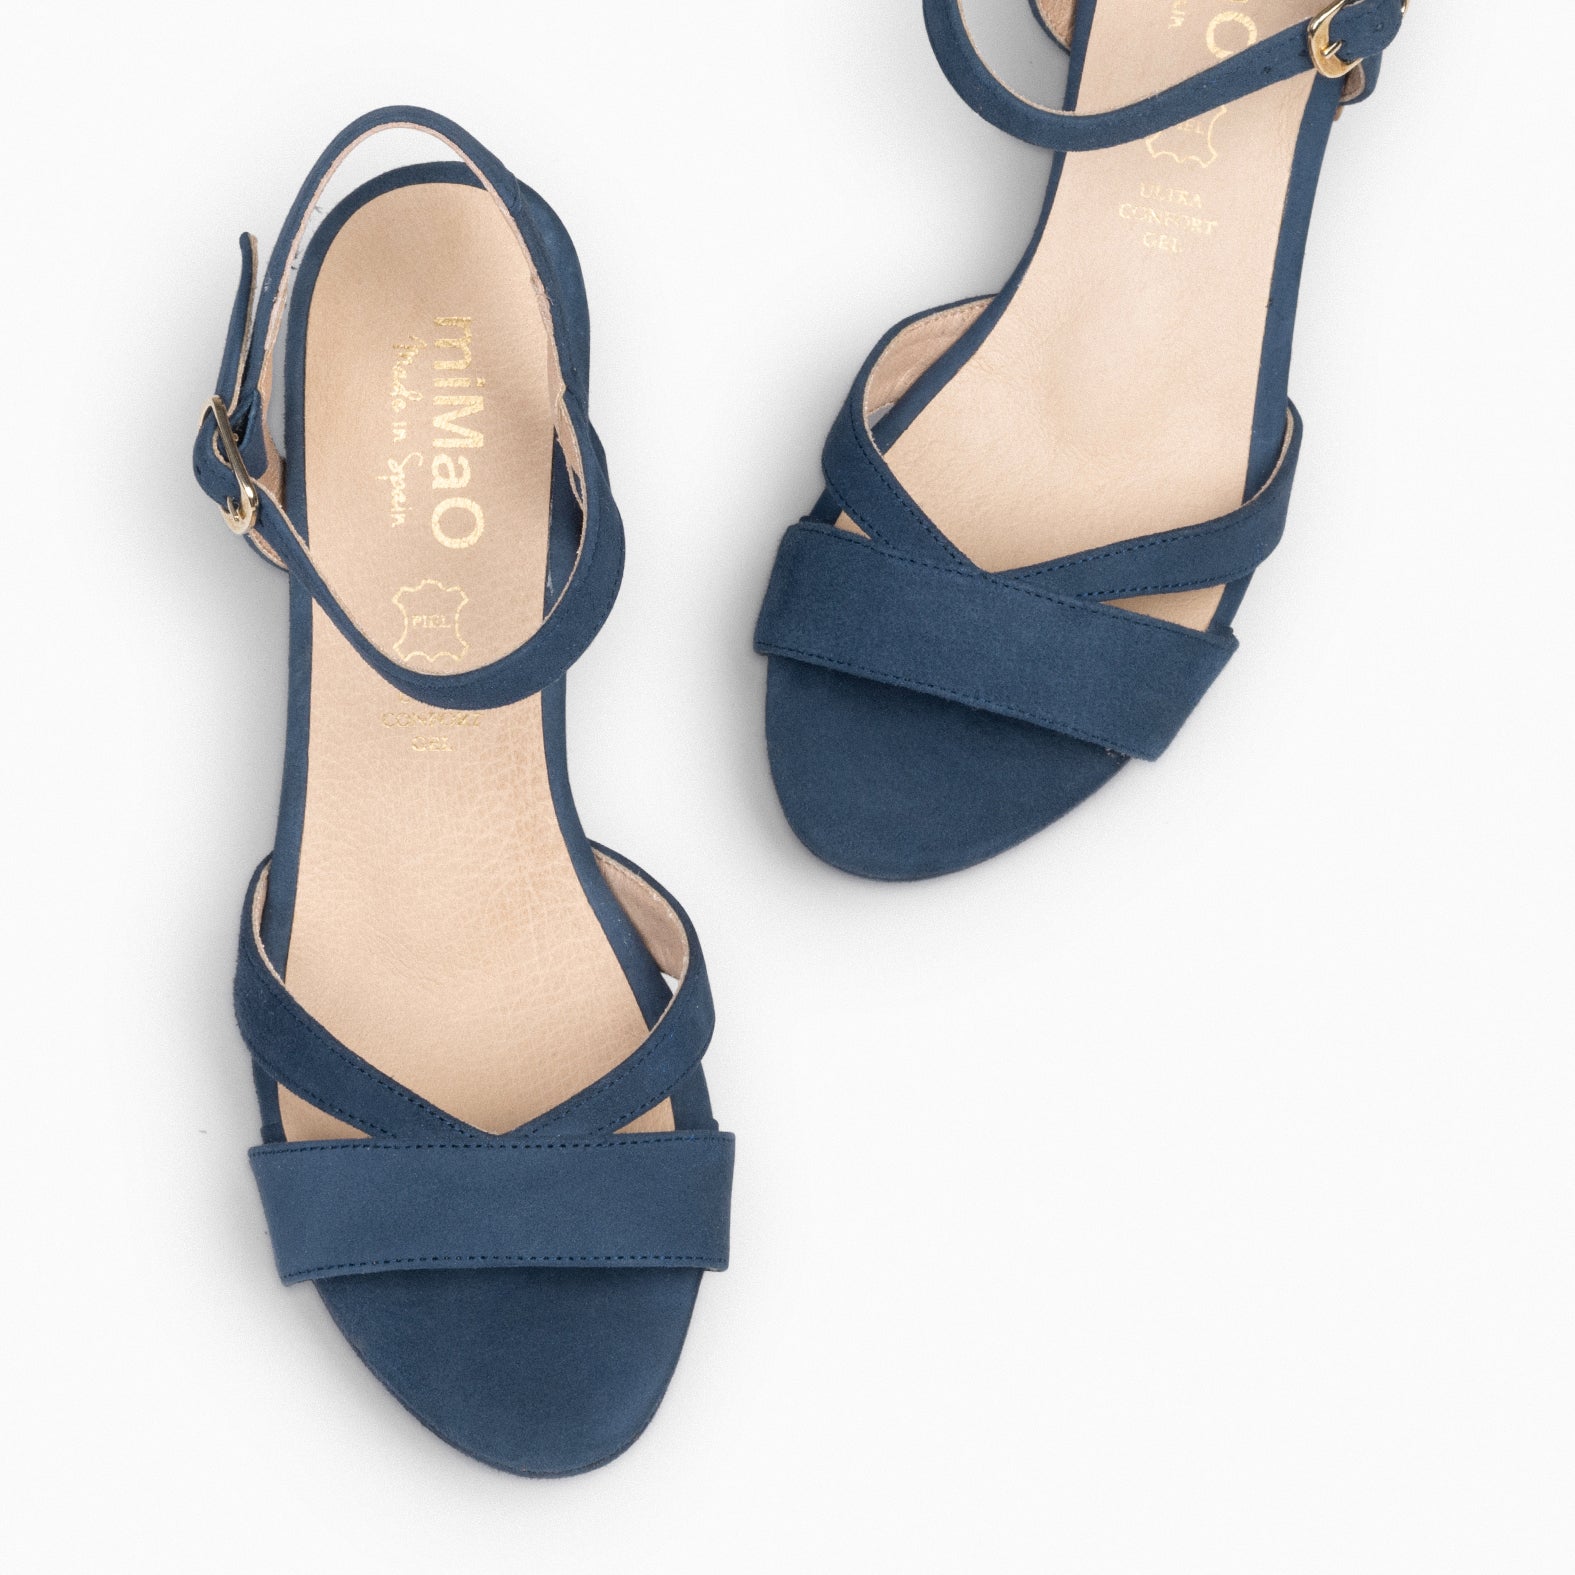 PARIS – NAVY high heel sandal with platform